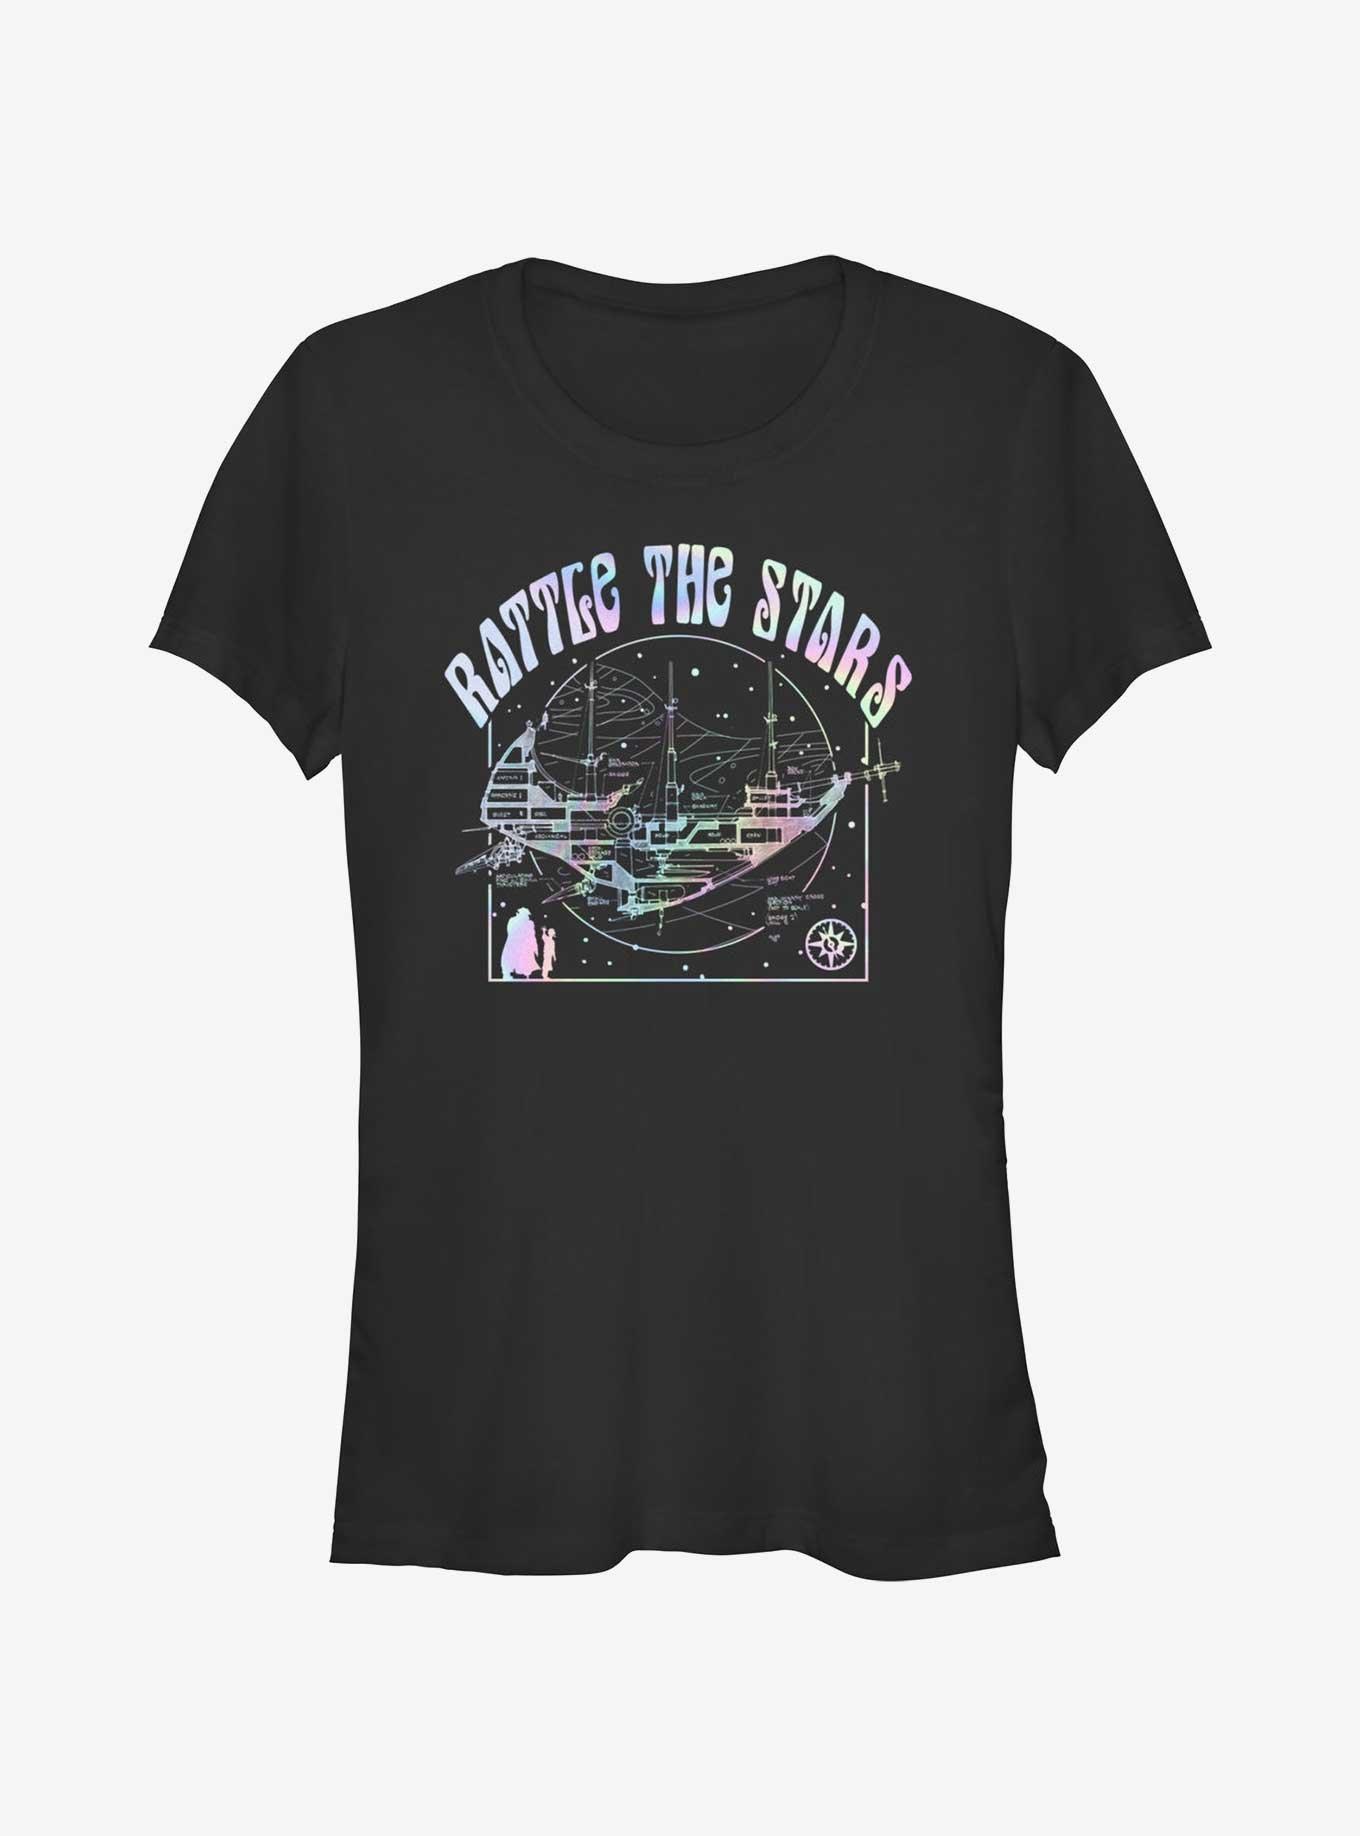 Disney Treasure Planet Rattle The Stars Argentum Ship Schematics Girls T-Shirt